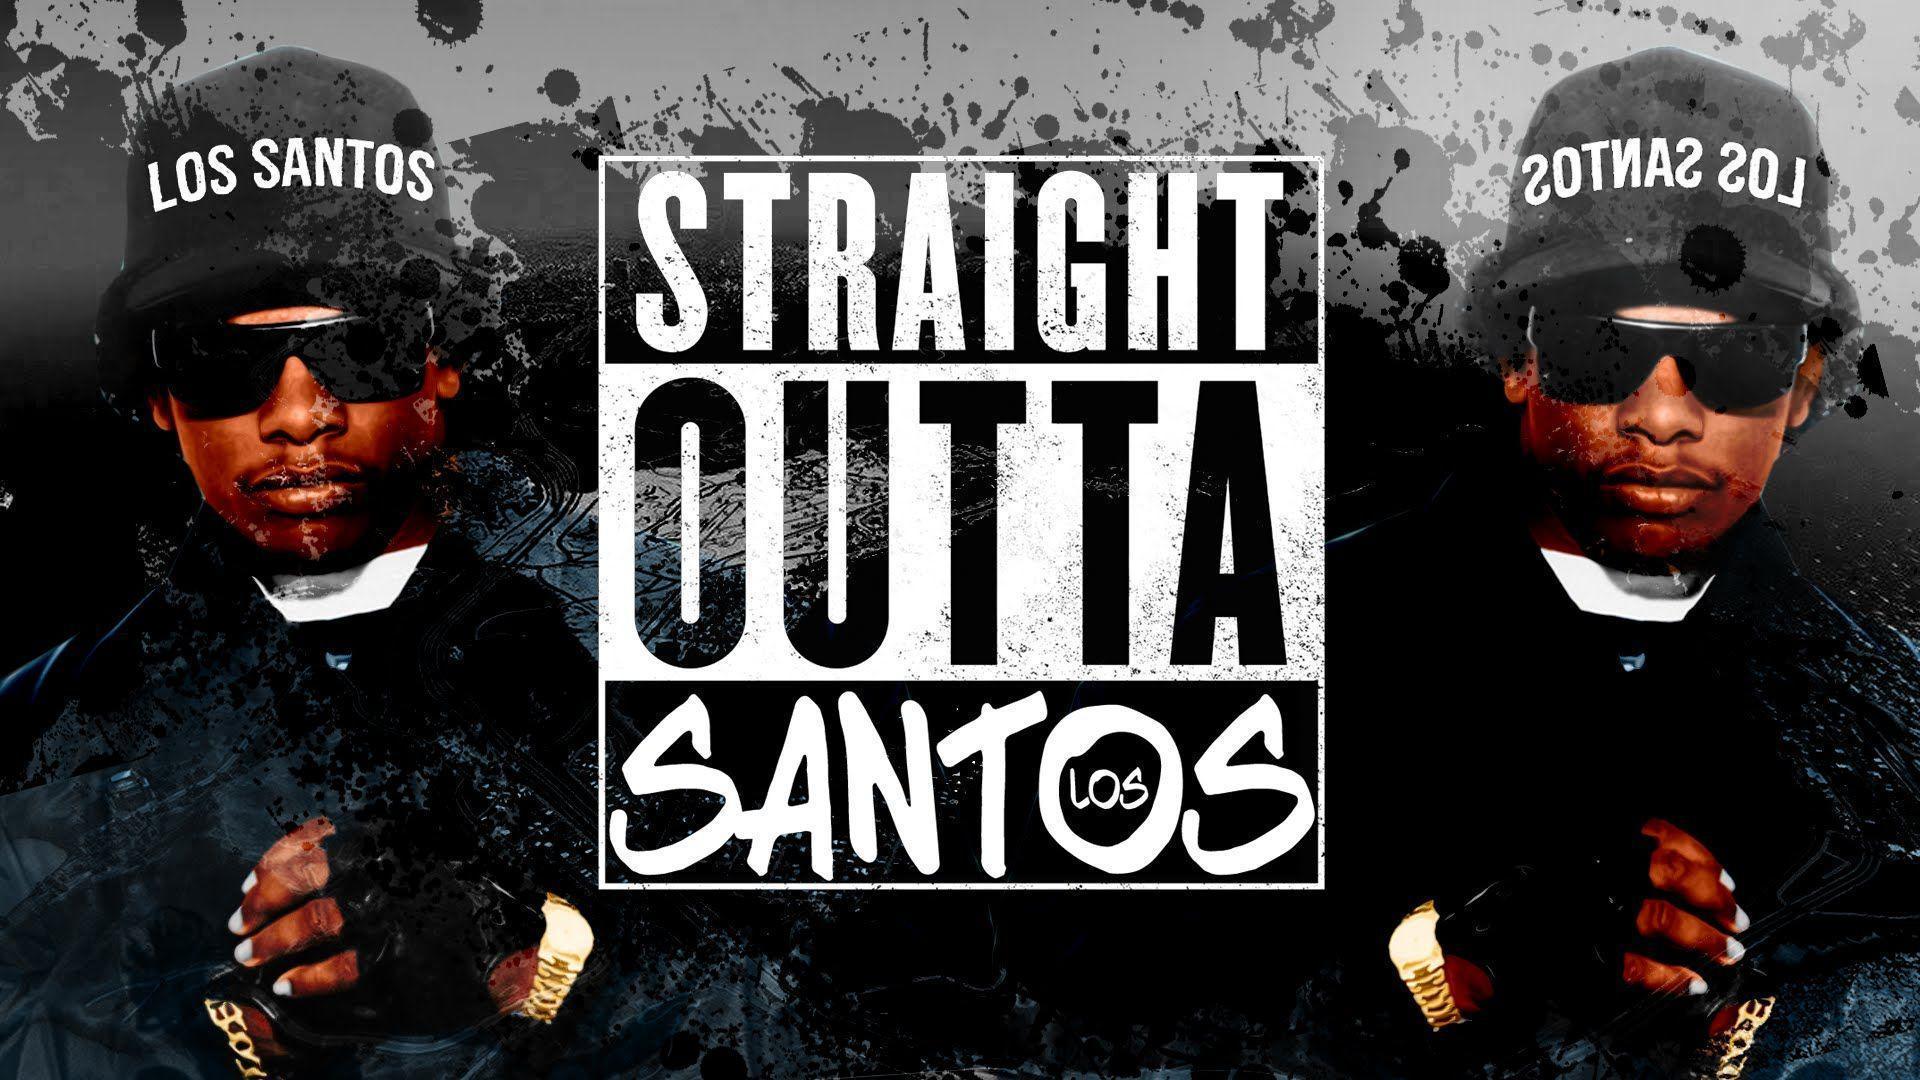 Straight outta Los Santos a GTA Movie Inspired by Straight outta